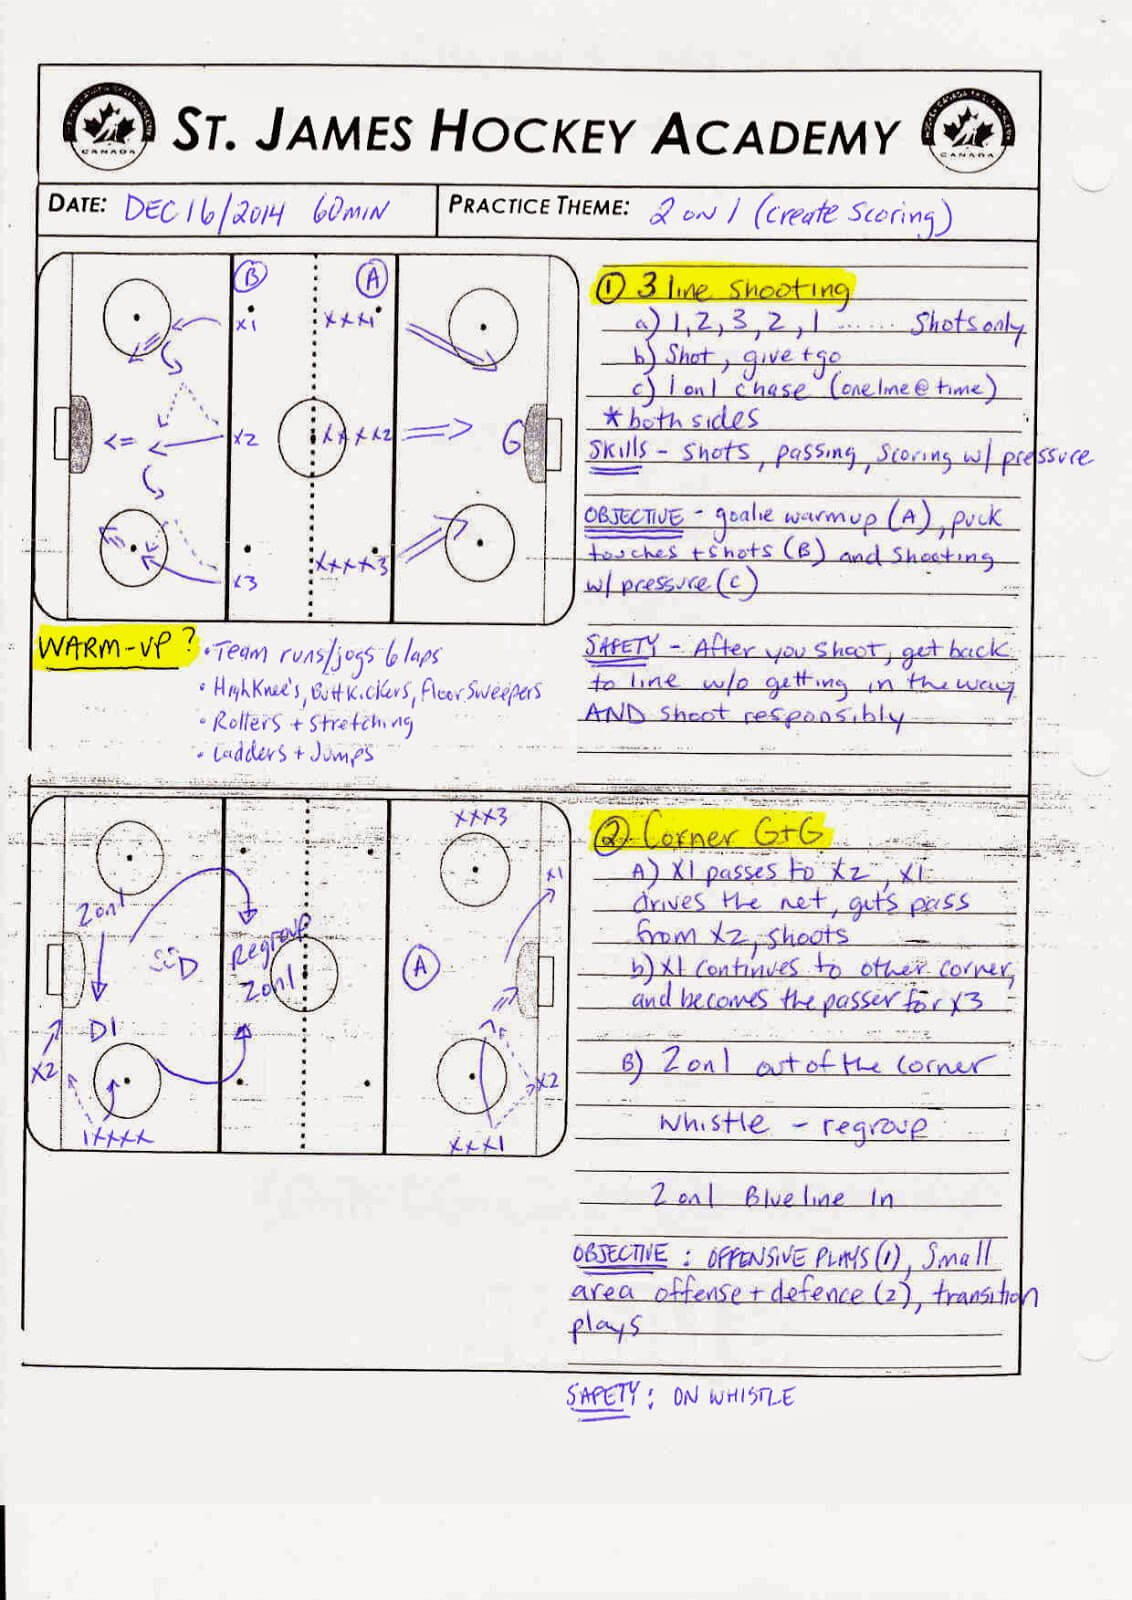 Pin Blank Practice Hockey Drill Sheets On Pinterest 5 Steps Regarding Blank Hockey Practice Plan Template